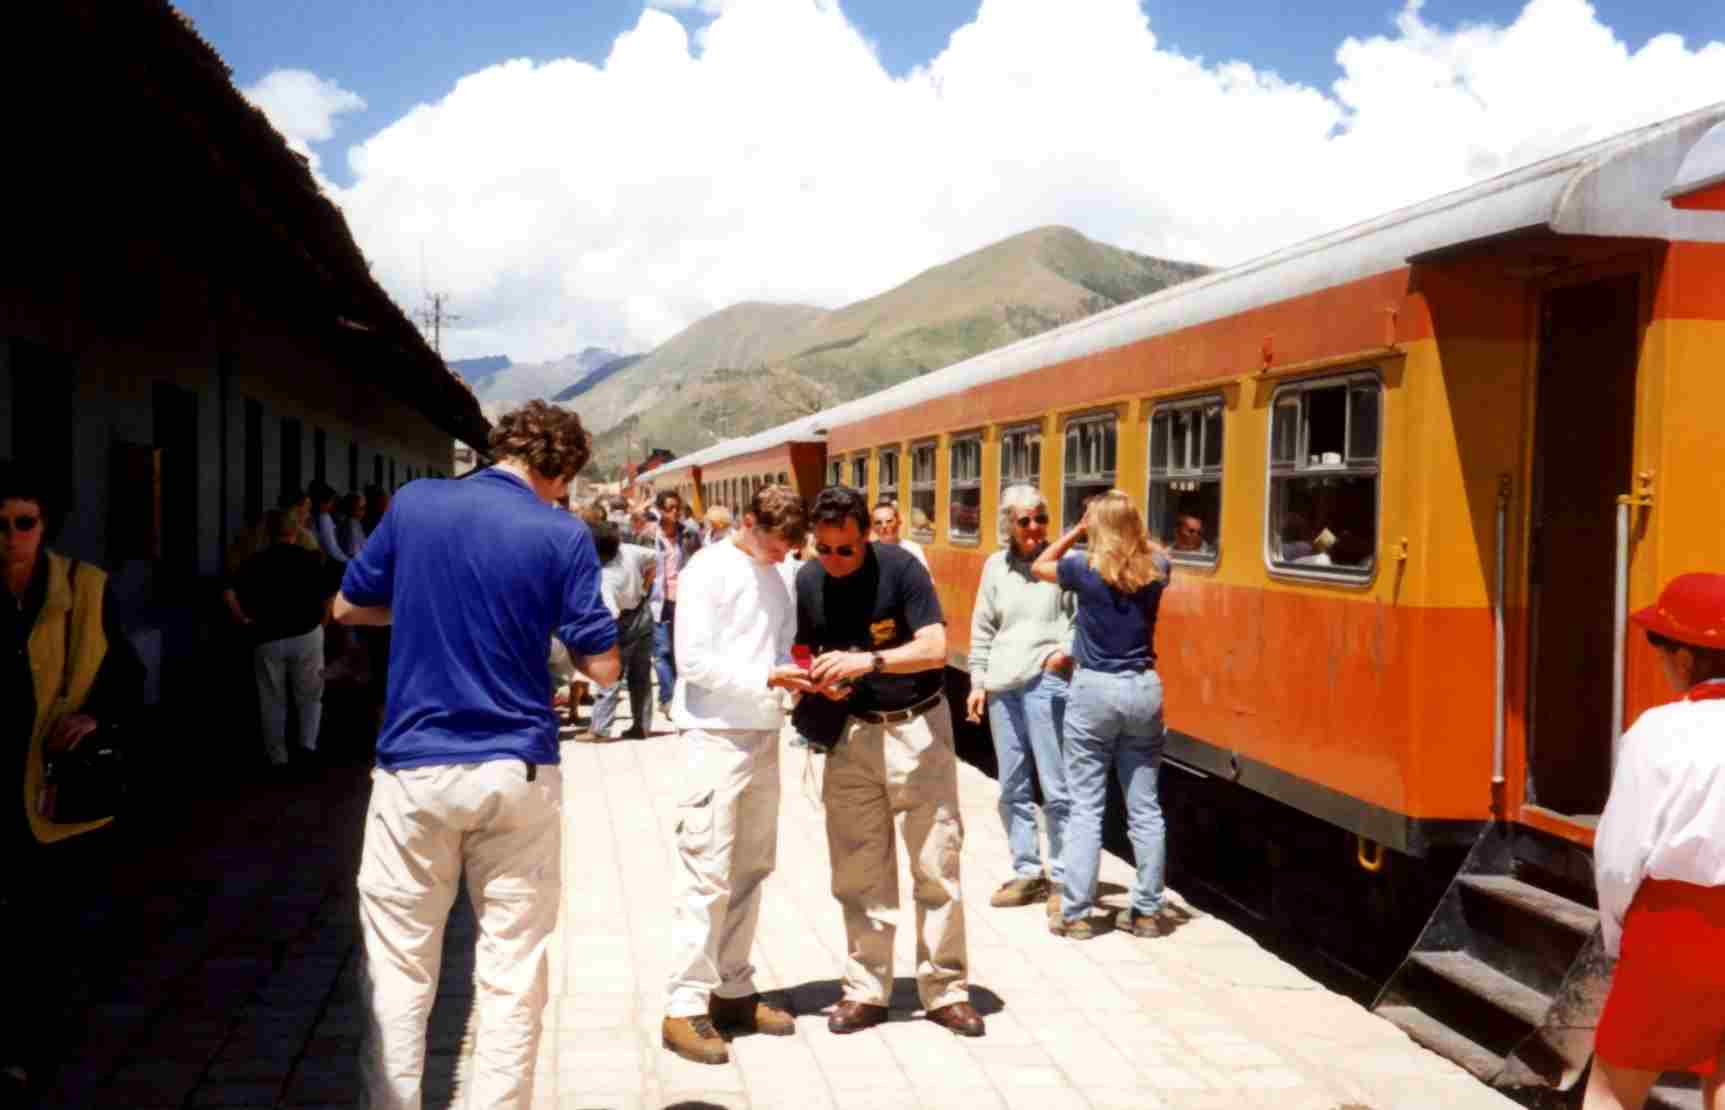 Train to Puno